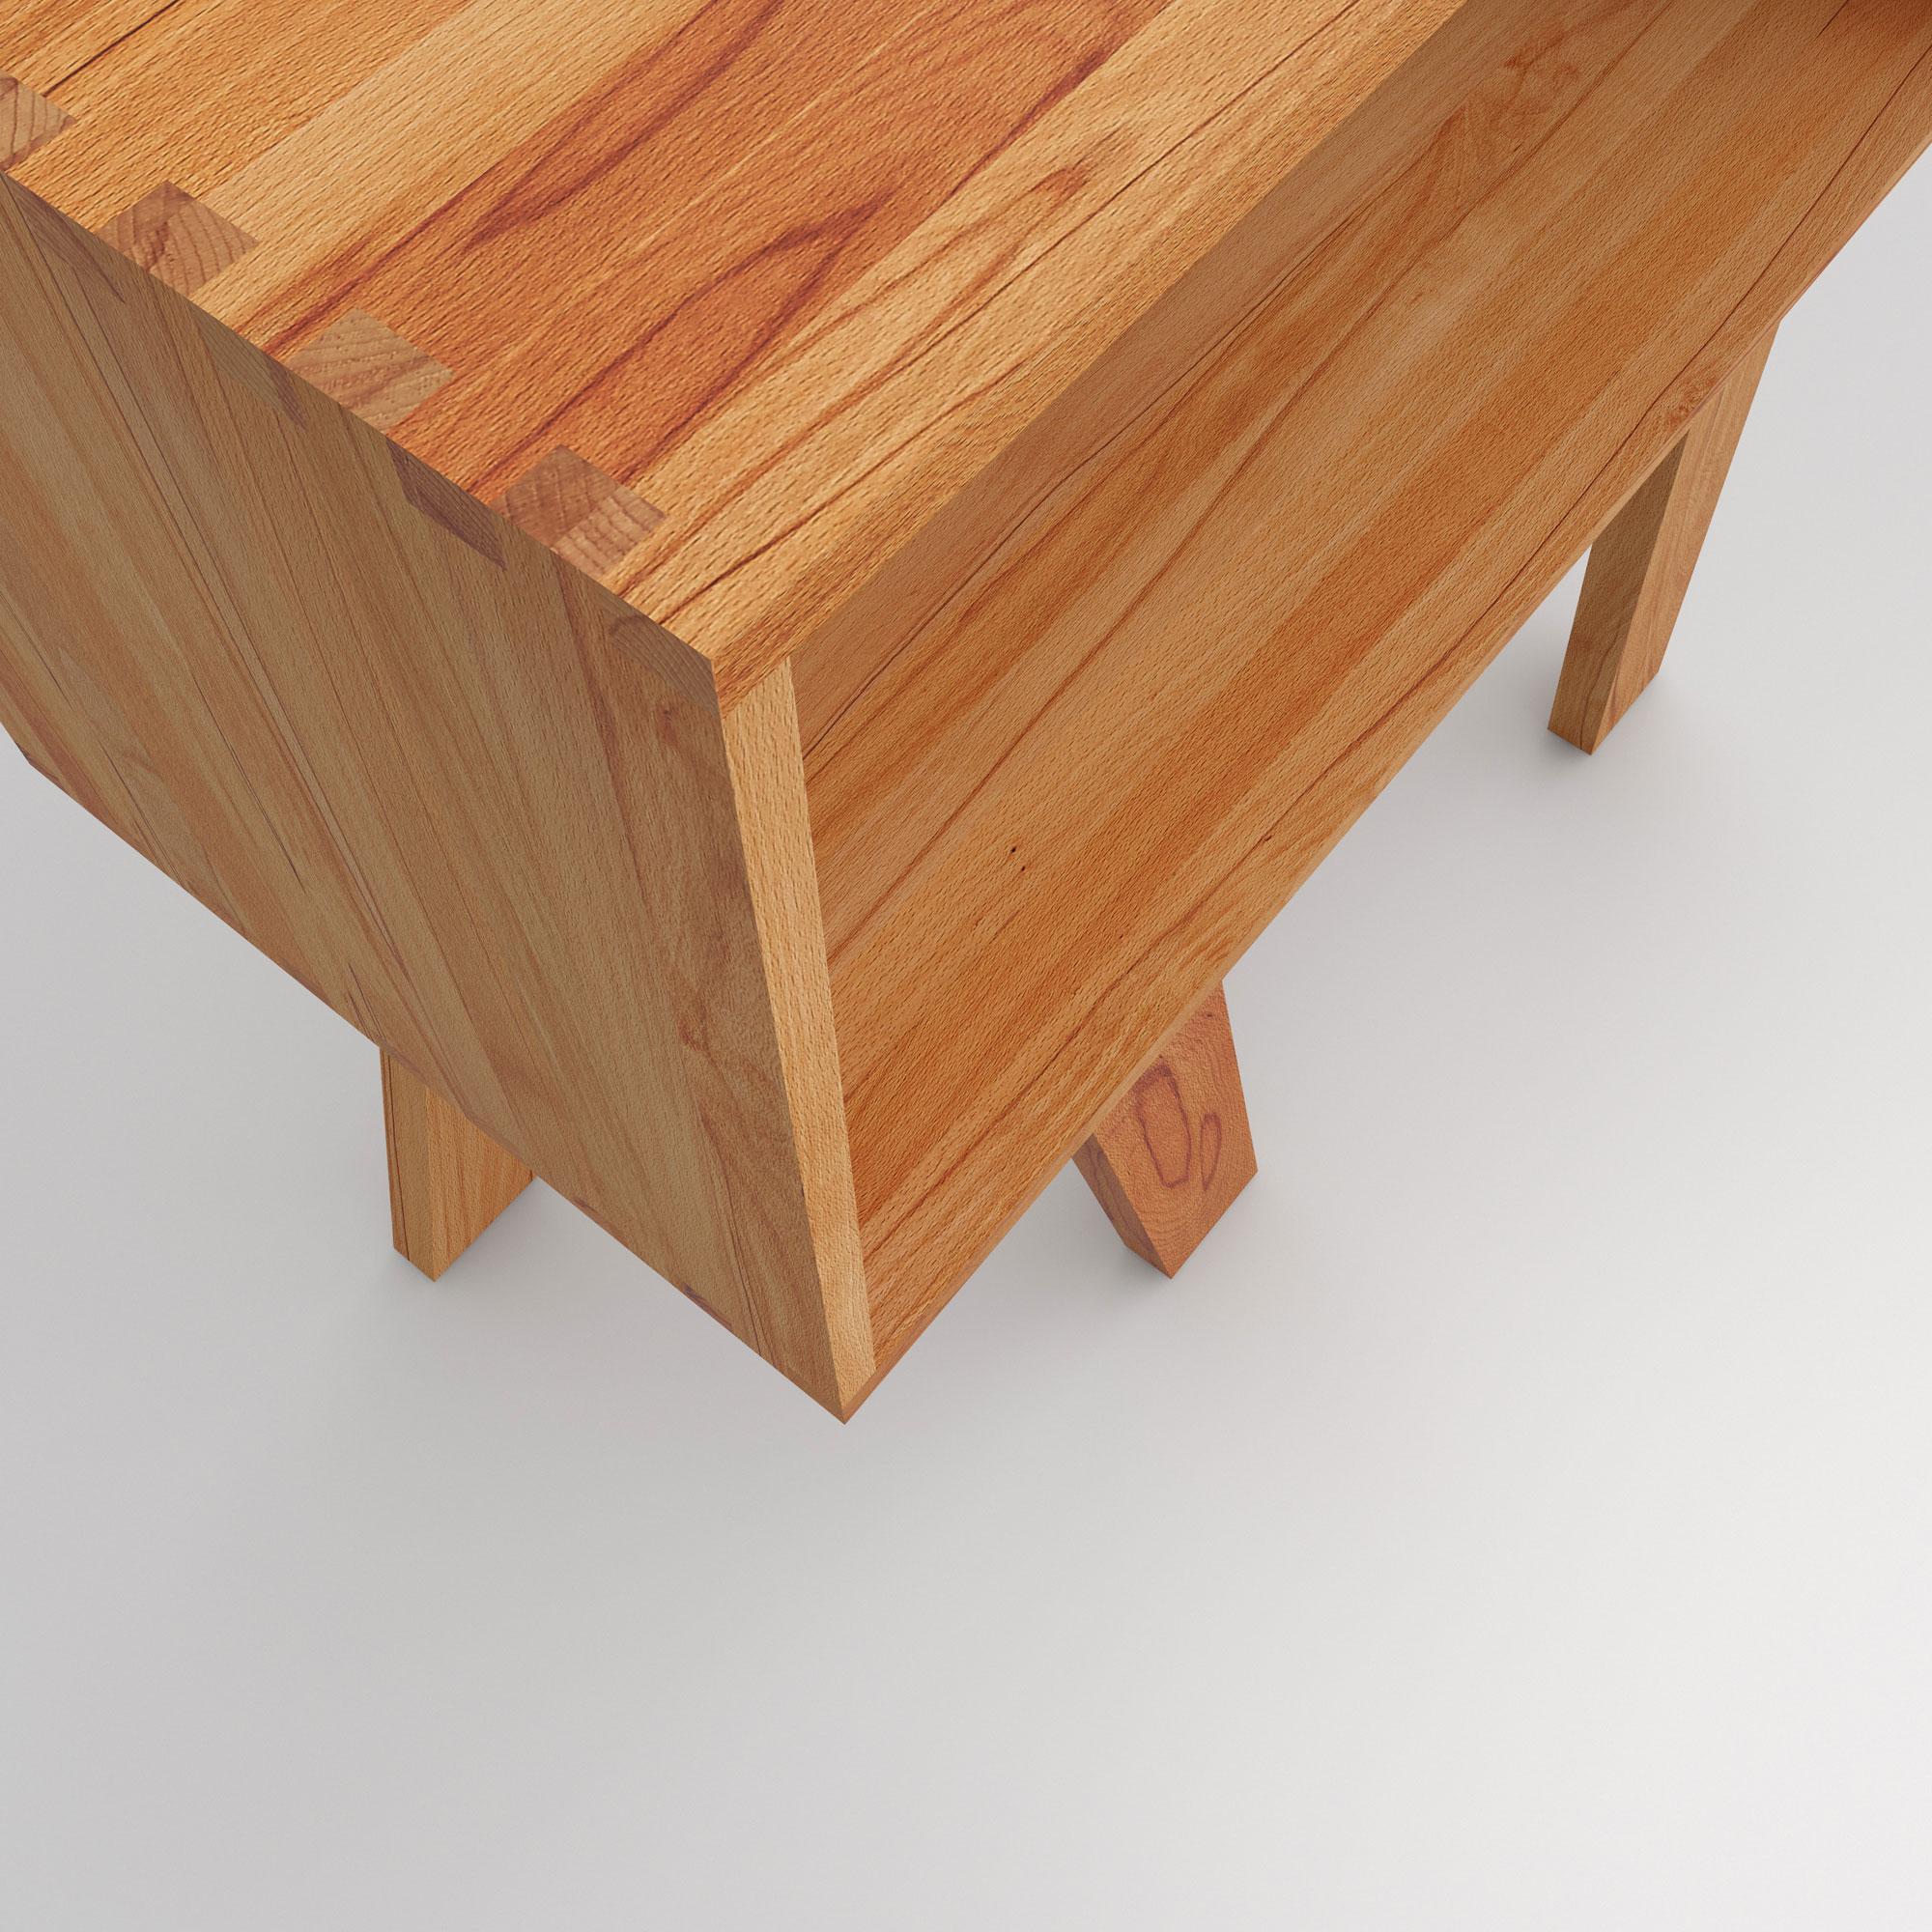 Designer Solid Wood Shelf GO cam4 custom made in solid wood by vitamin design